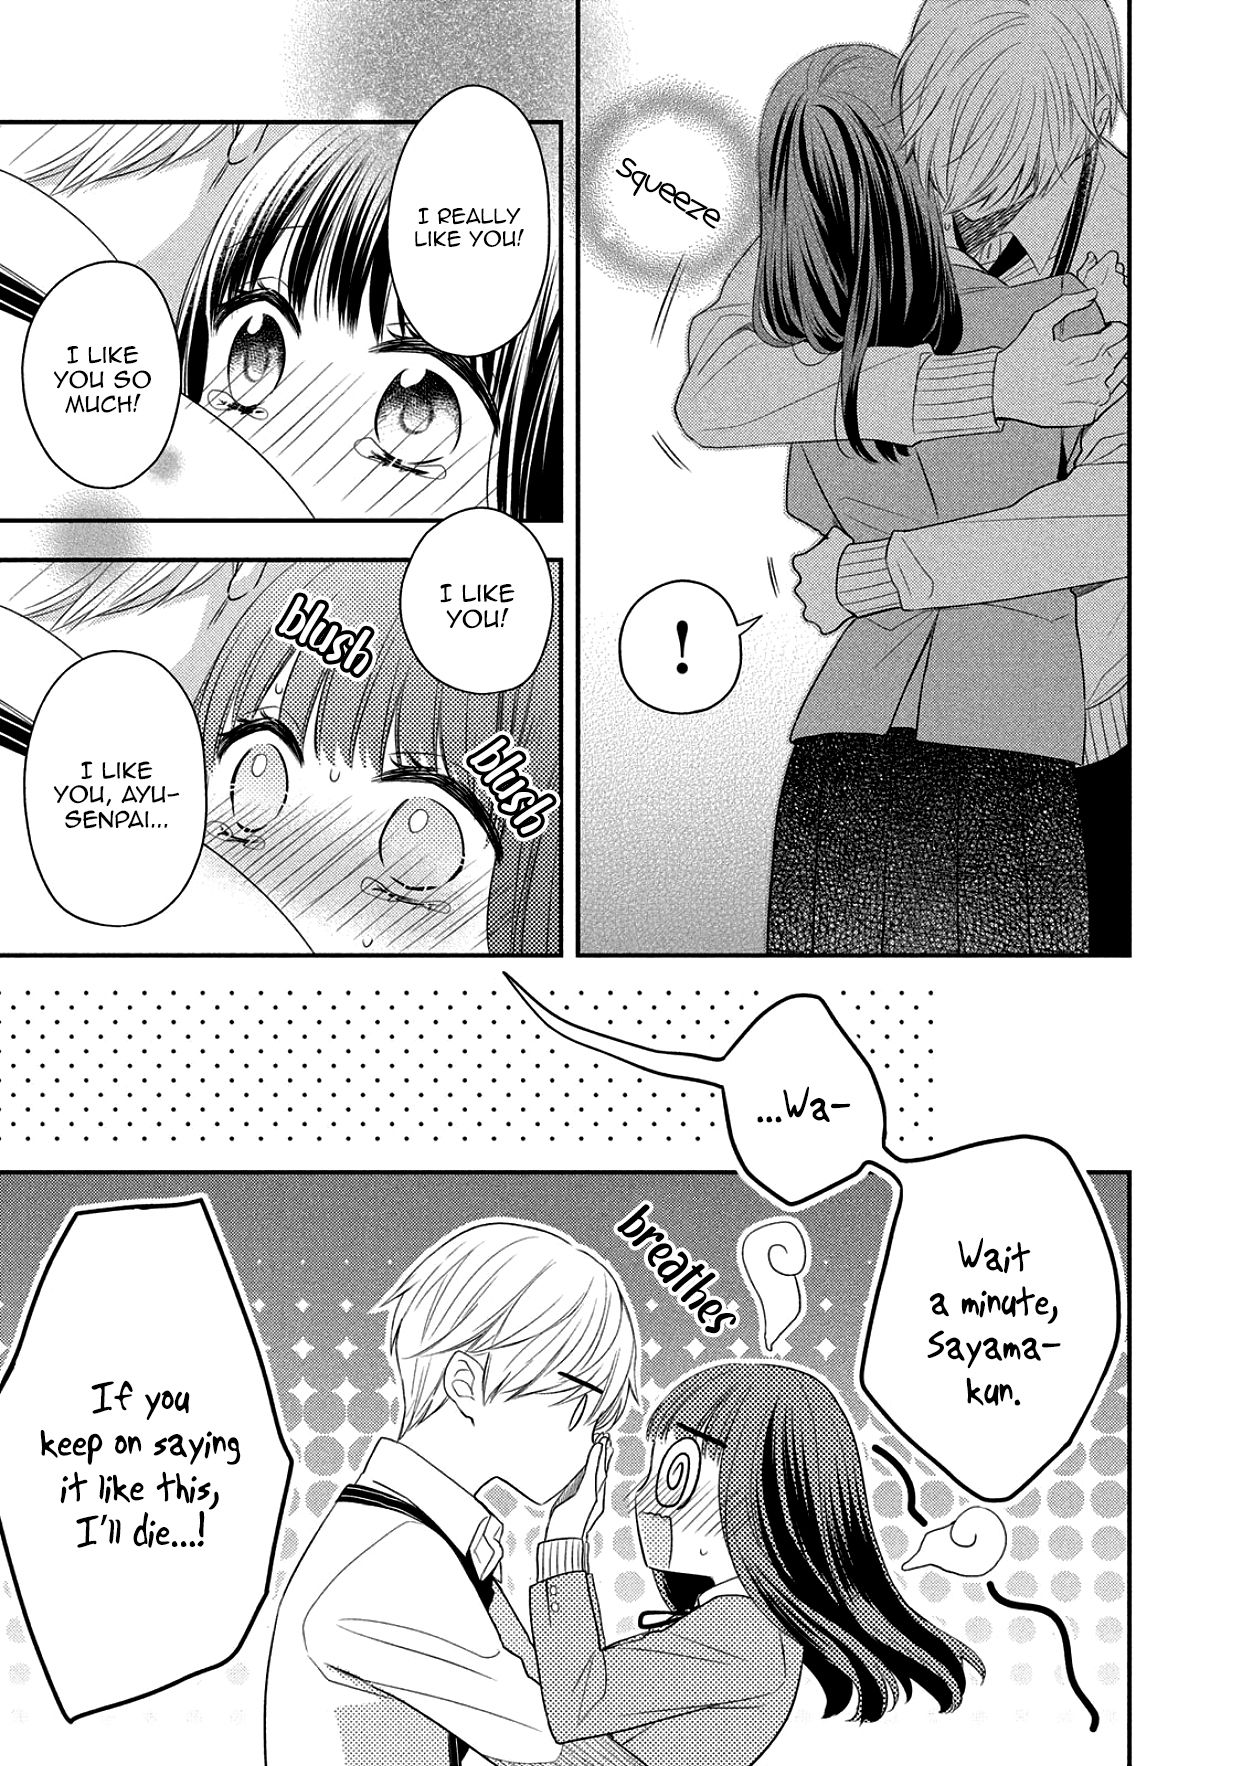 Kirai ni Narimasu, Sayama-kun! - chapter 15 - #3